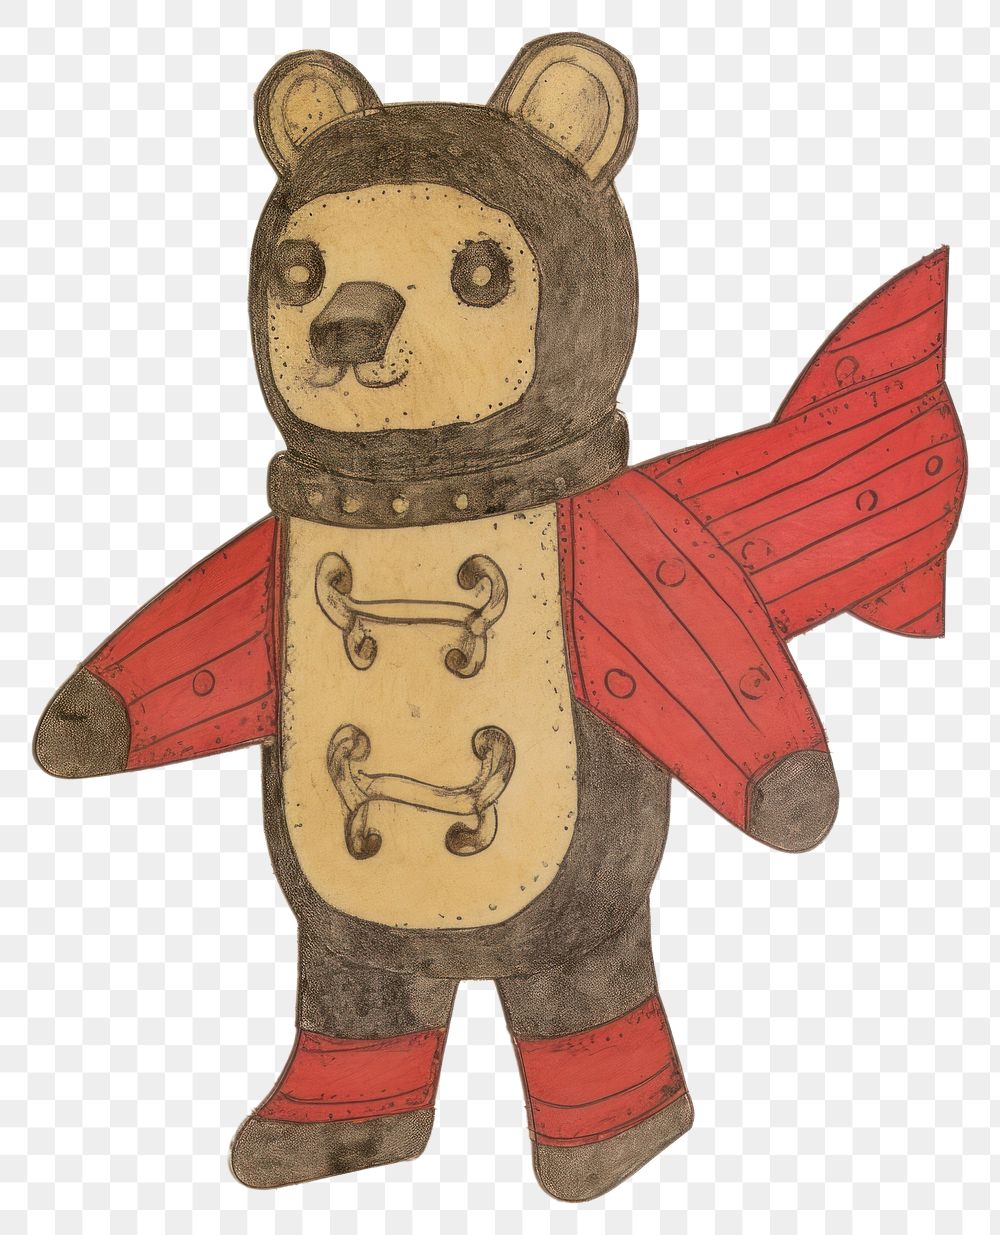 PNG Illustration of a toy representation creativity kangaroo.